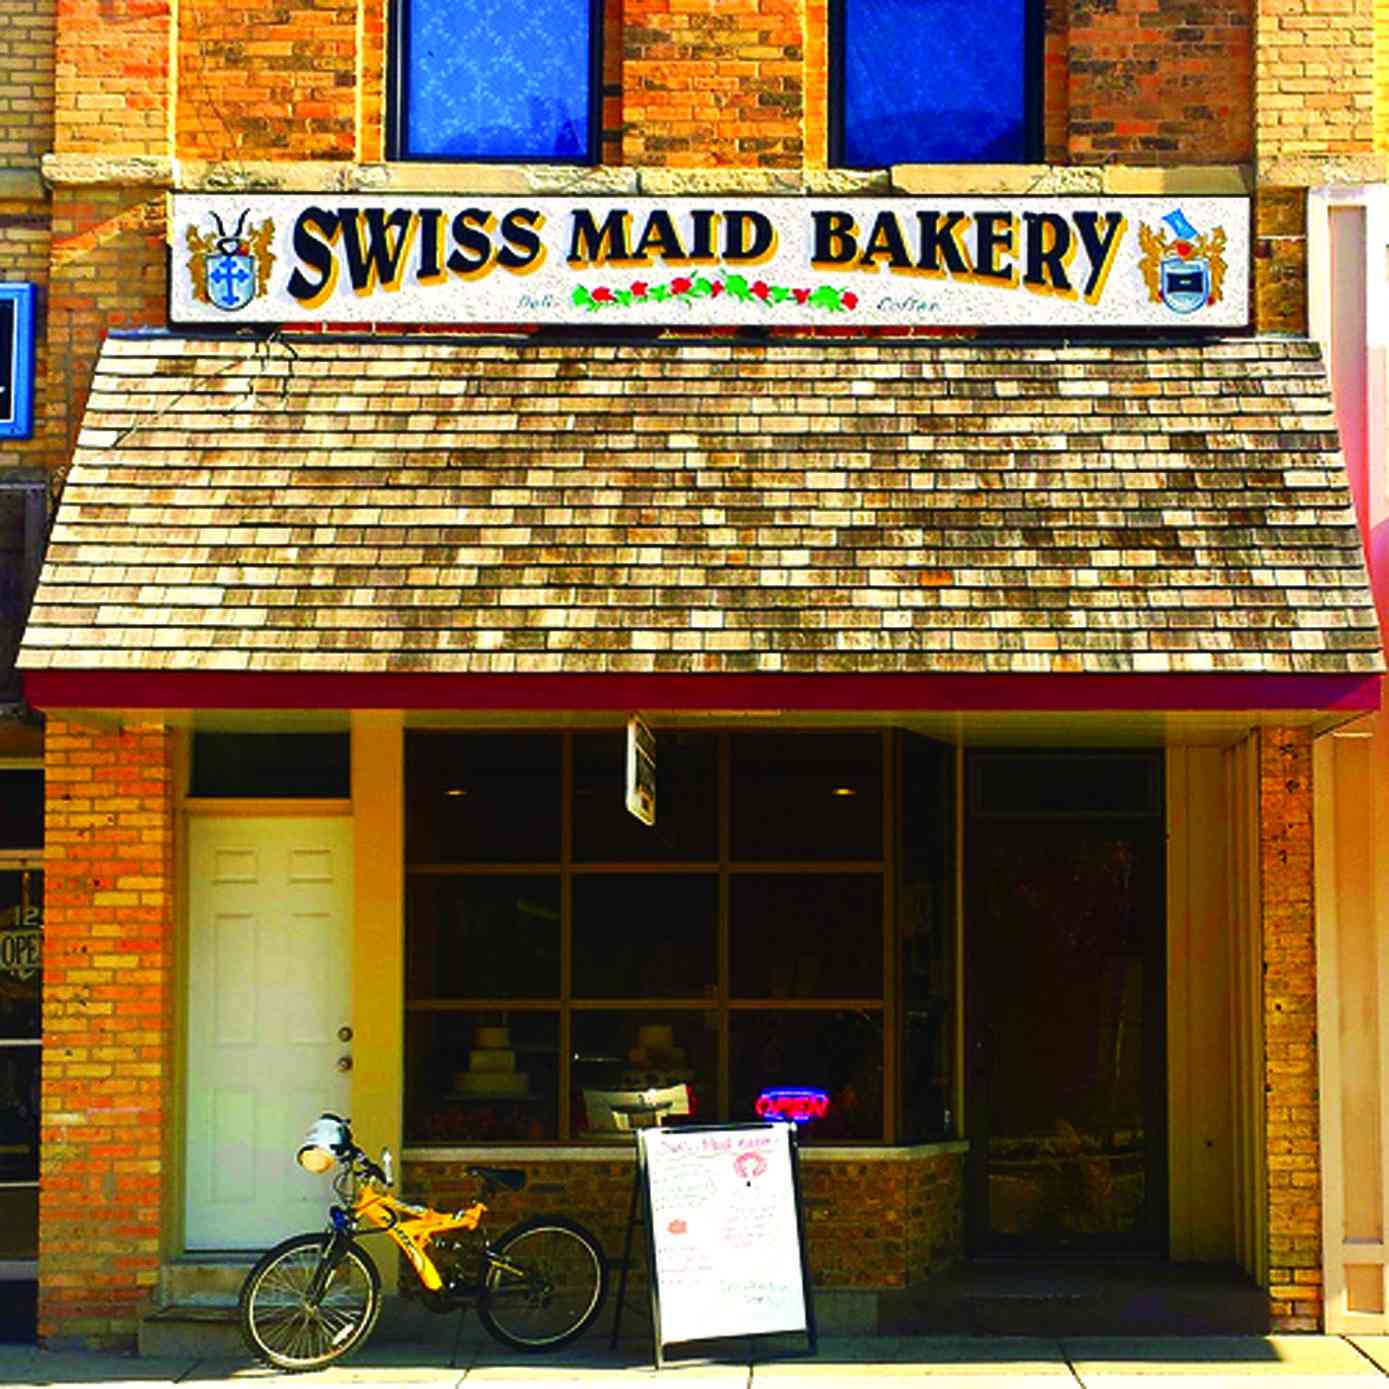 bakery story 2 friends